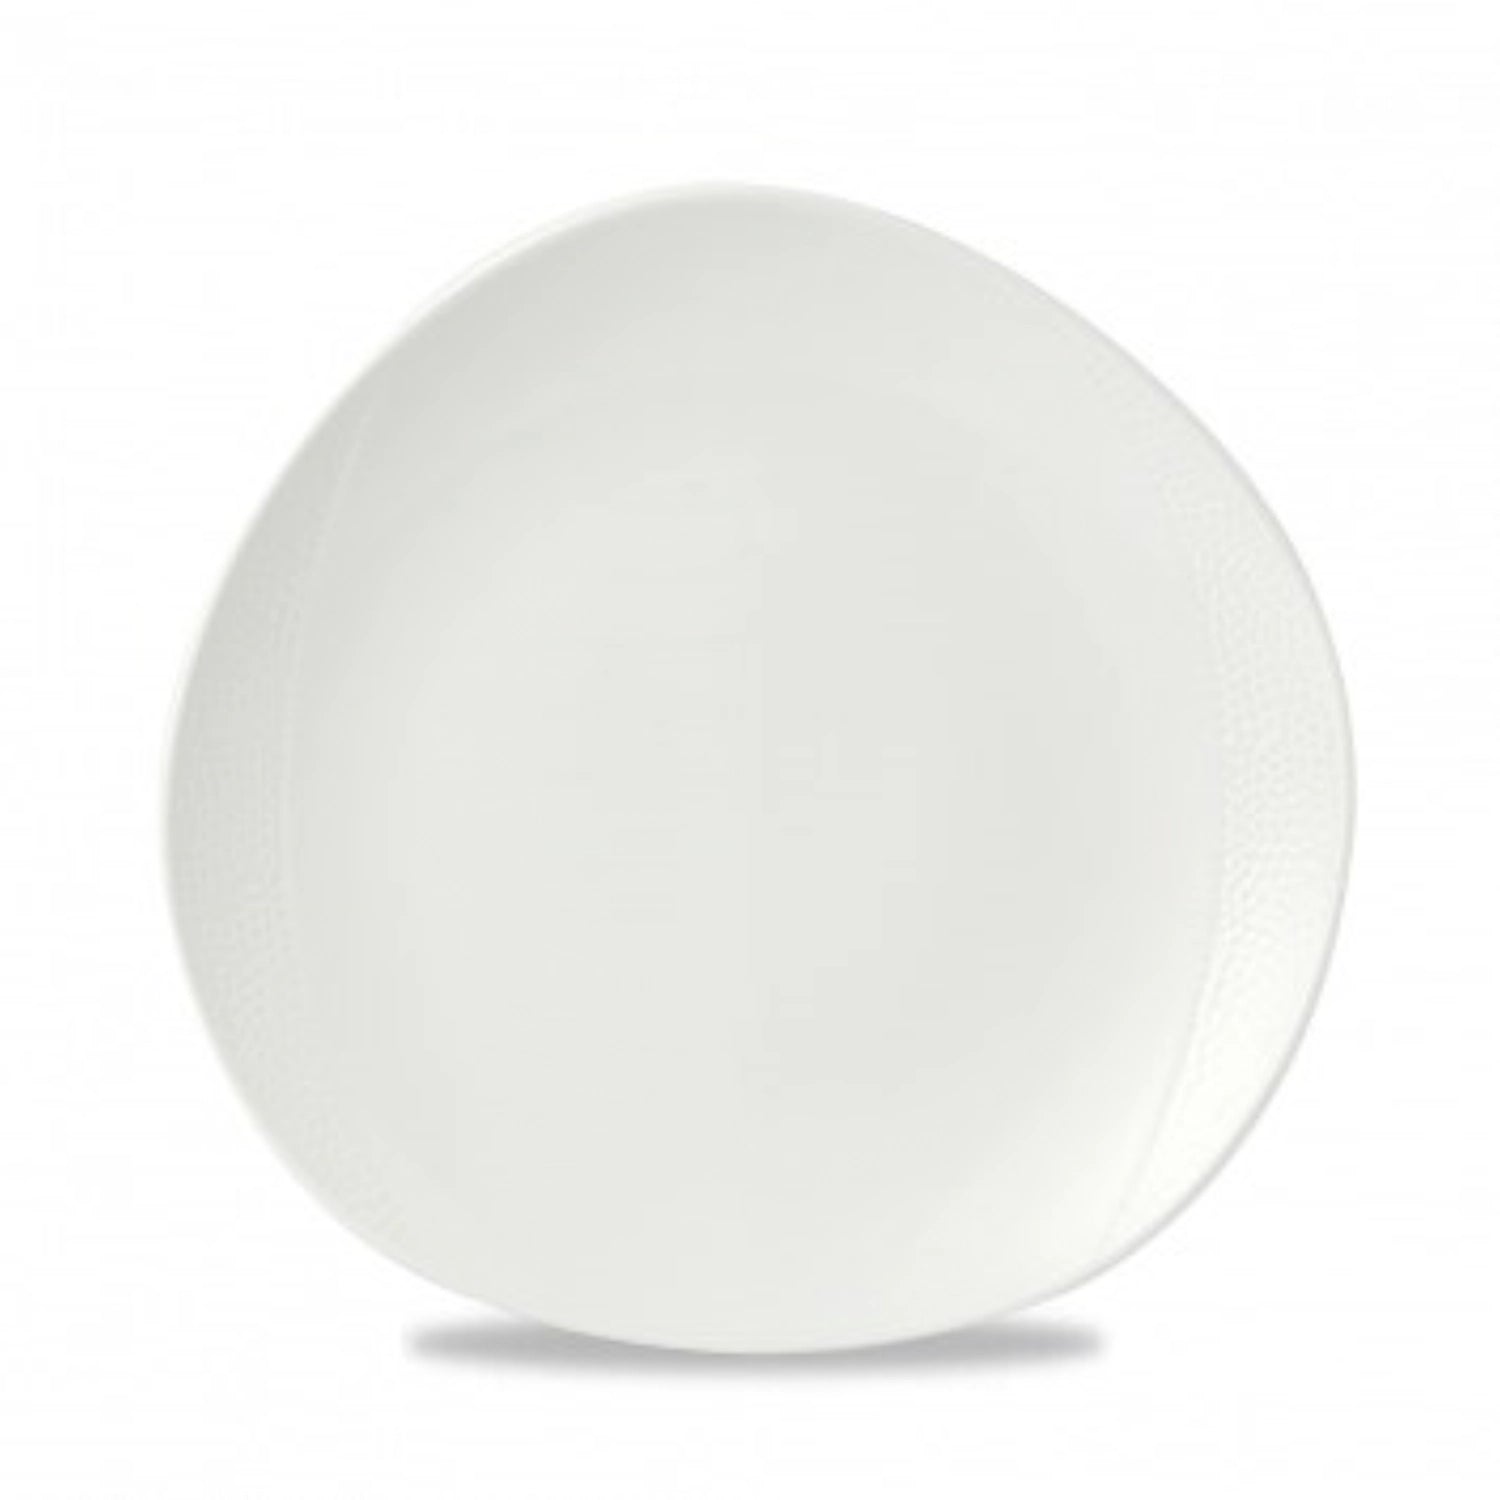 Isla white organic Teller flach 28.6cm - KAQTU Design